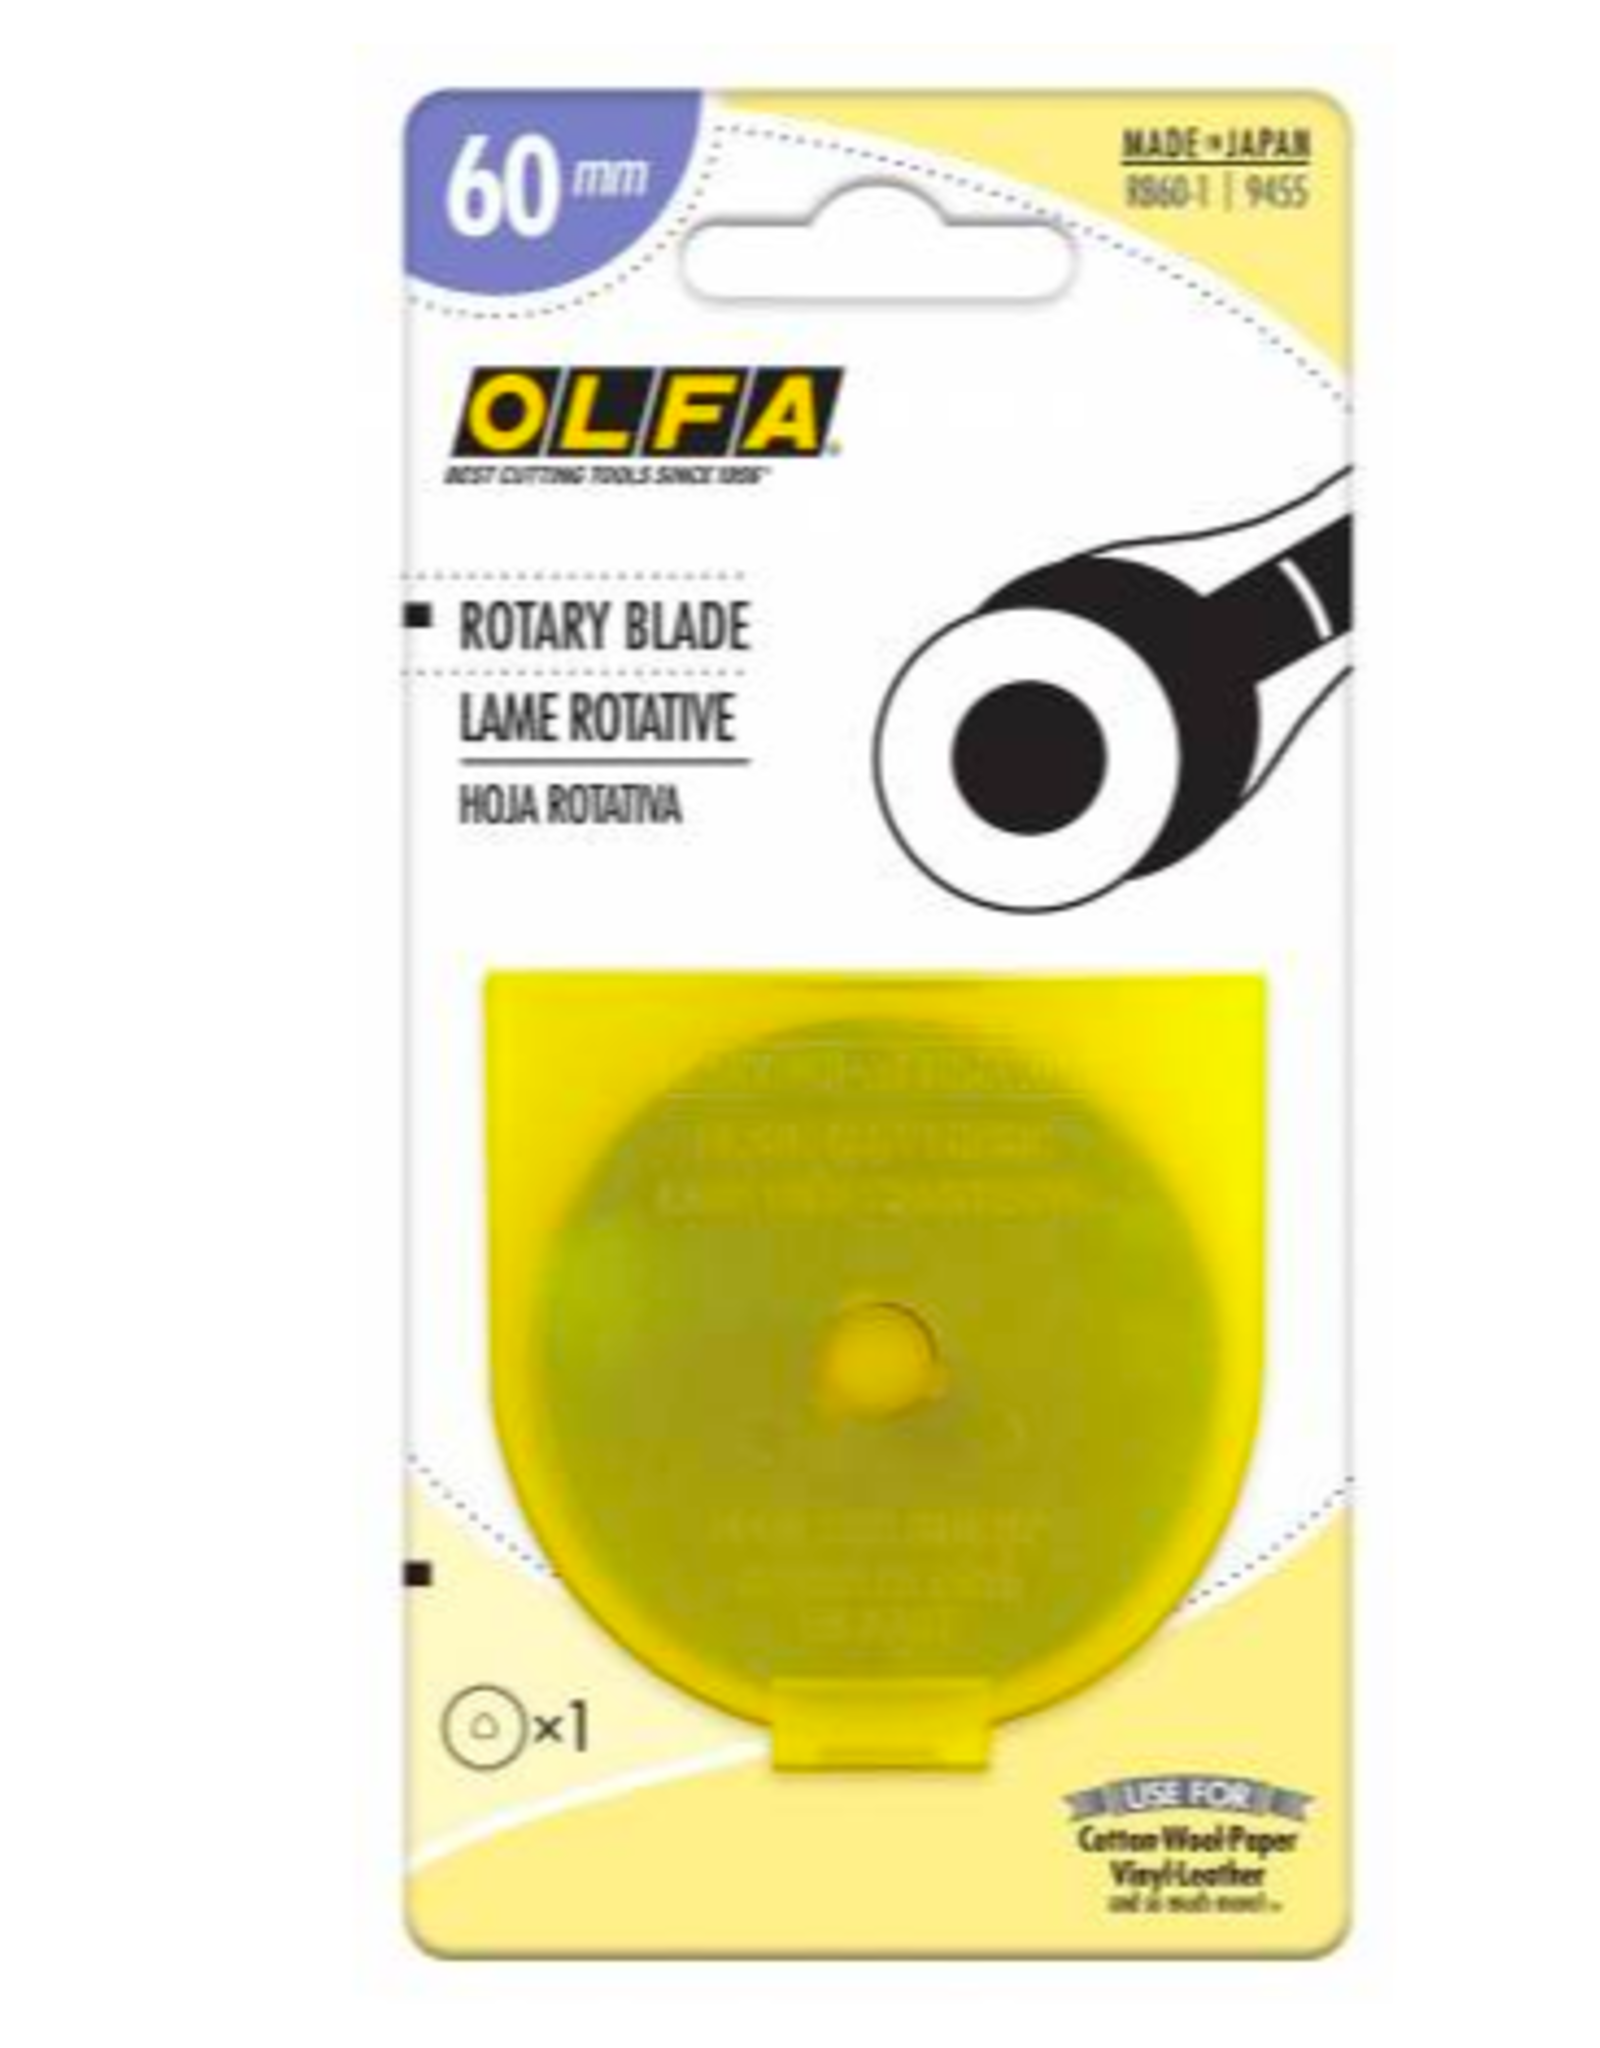 OLFA OLFA 60 mm rotary blade RTY3 1pc